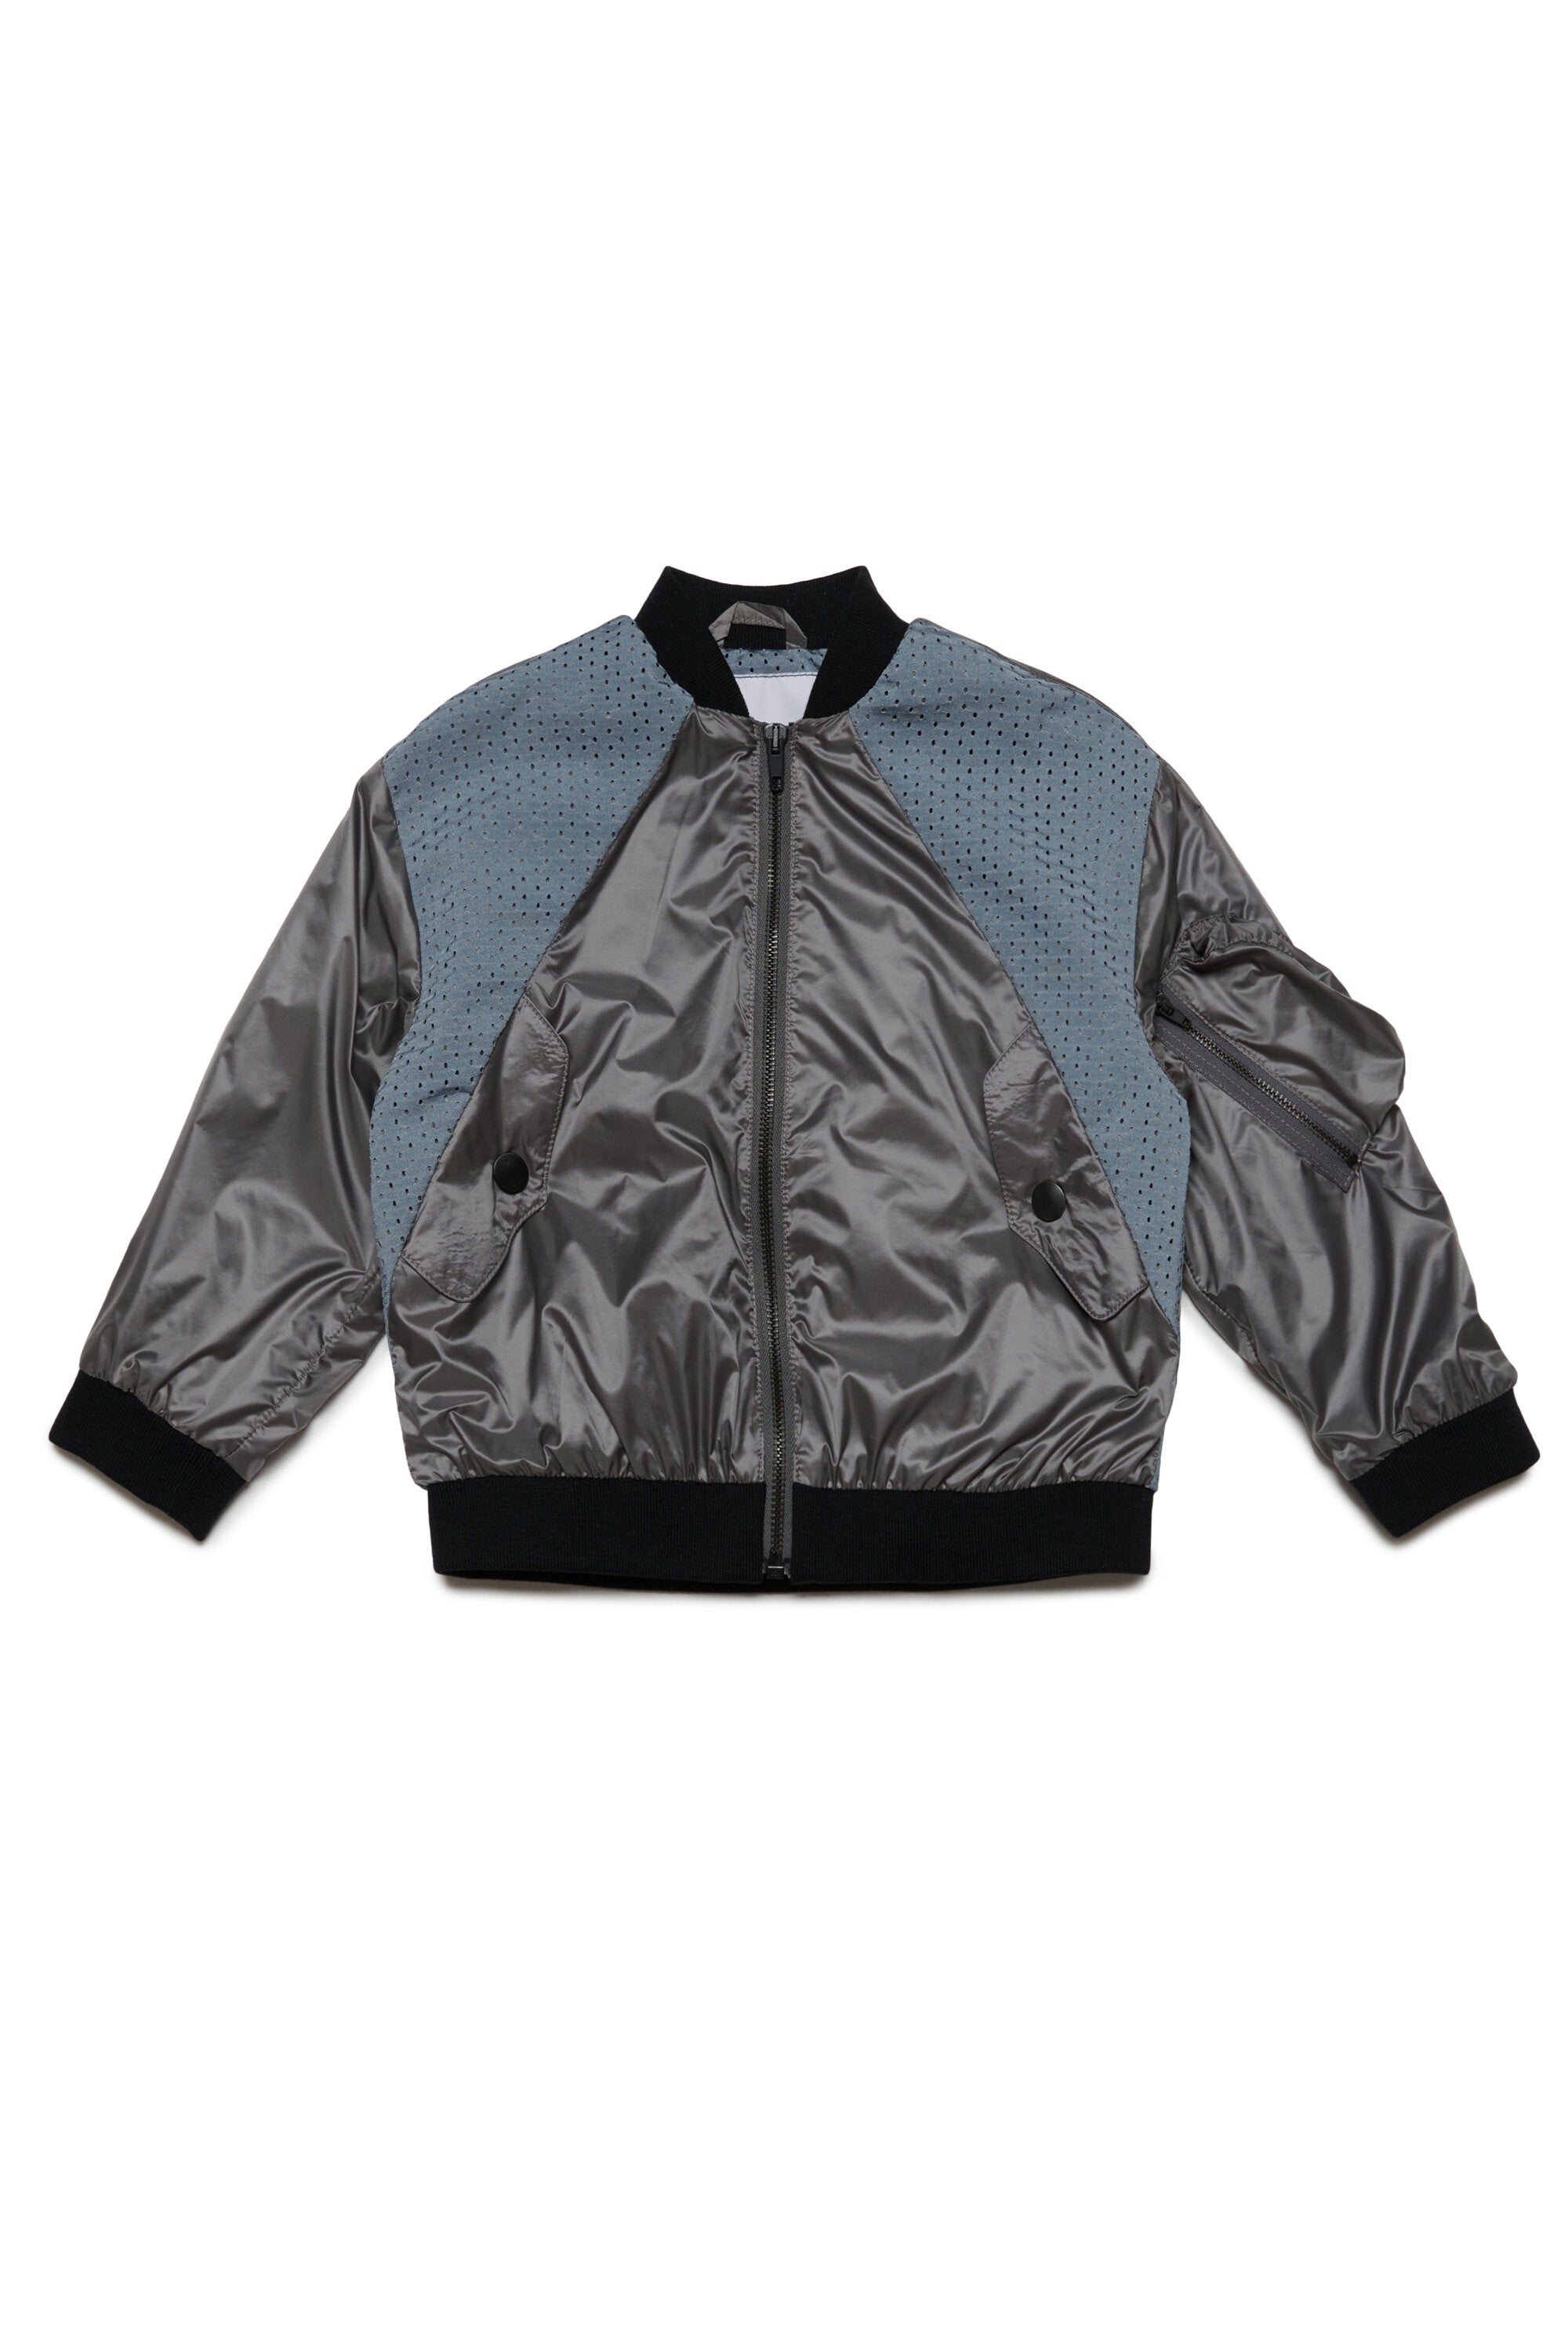 Deadstock fabric bomber jacket with MYAR logo